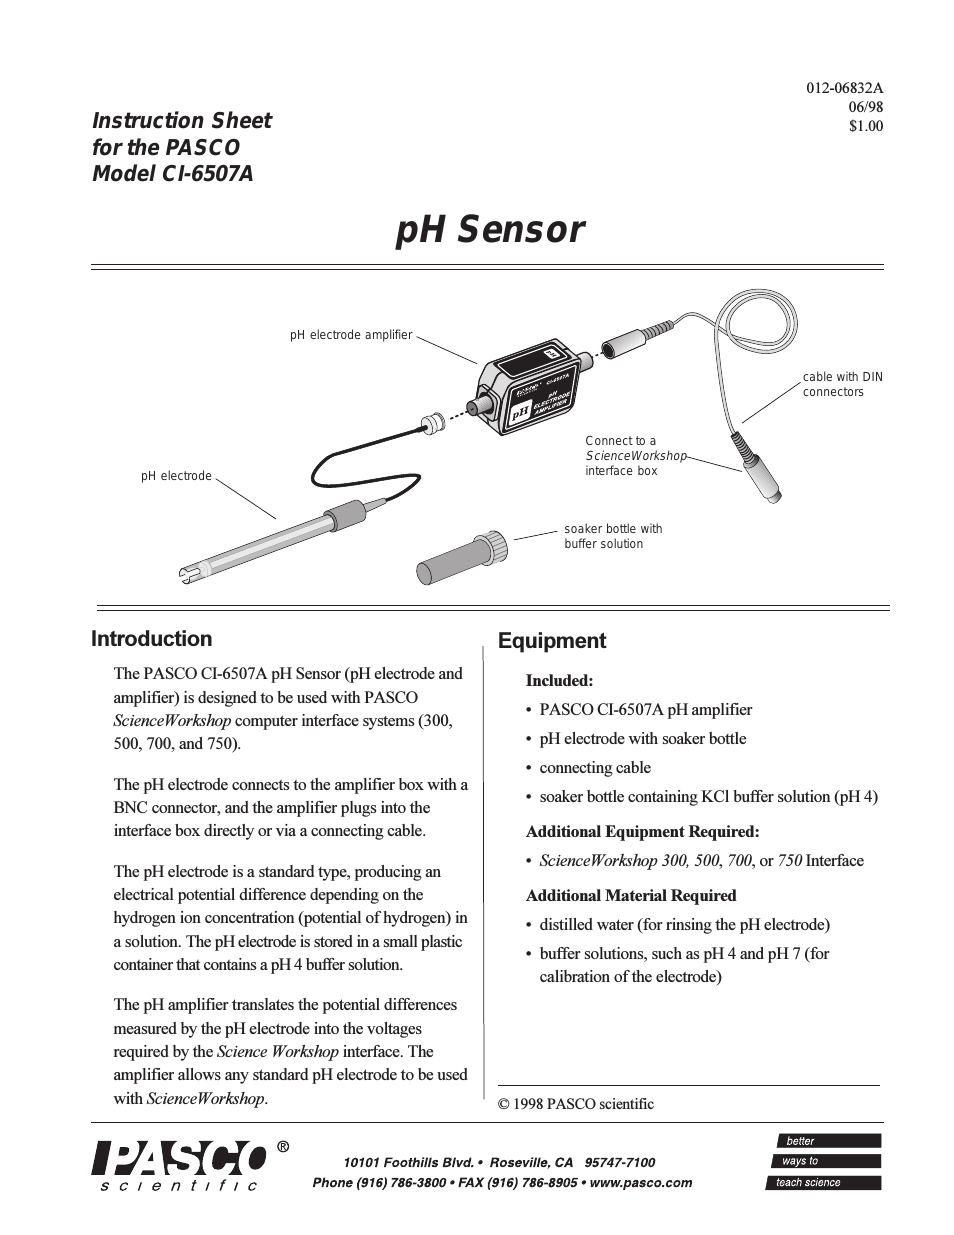 CI-6507A pH Sensor